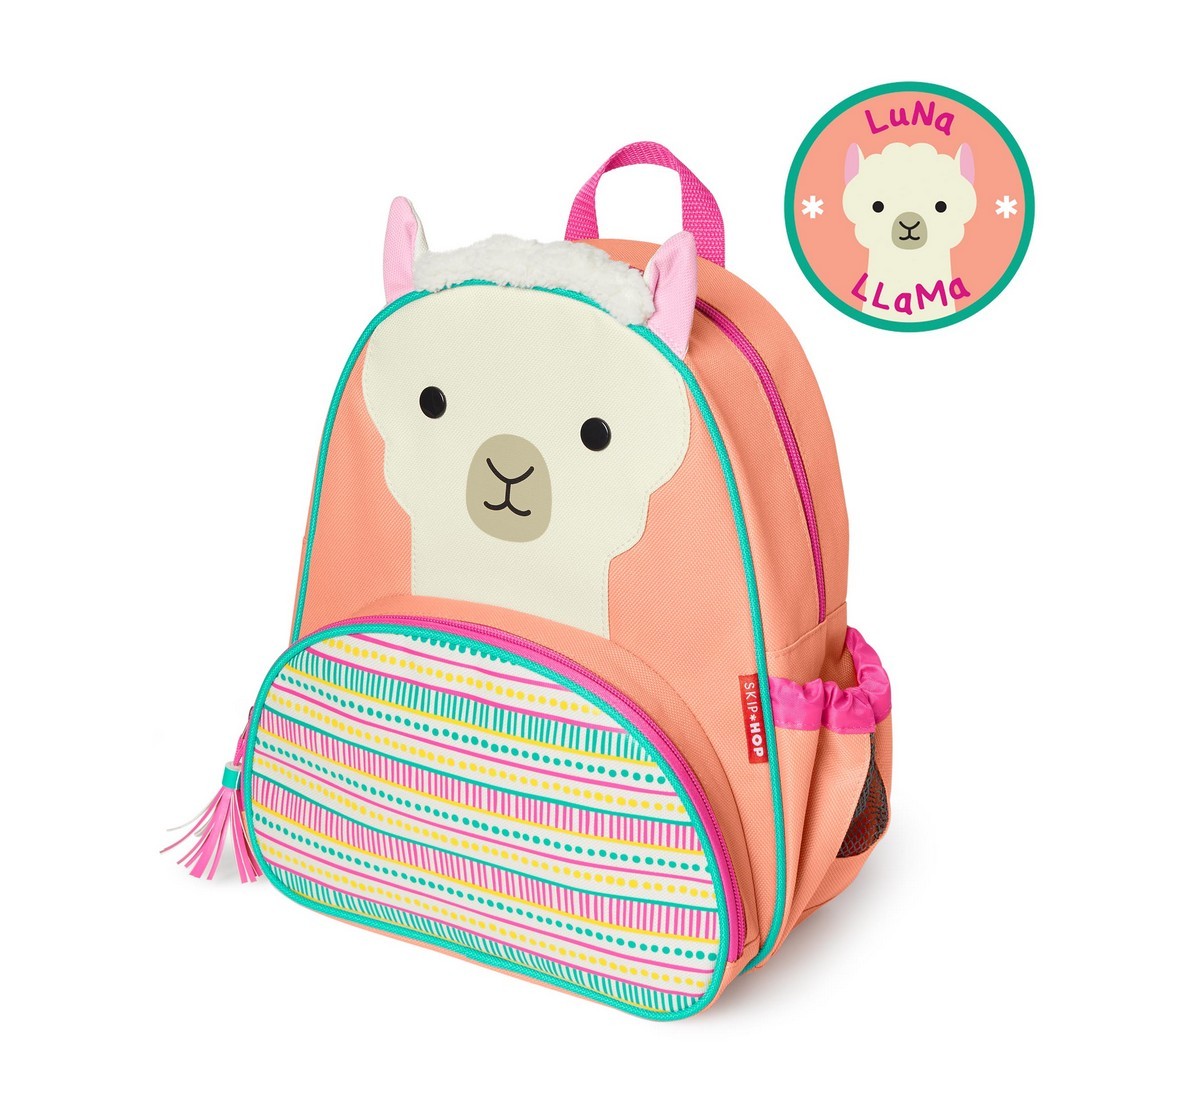 Skip Hop Zoo Little Kid Backpack Llama 3Y+, Multicolour